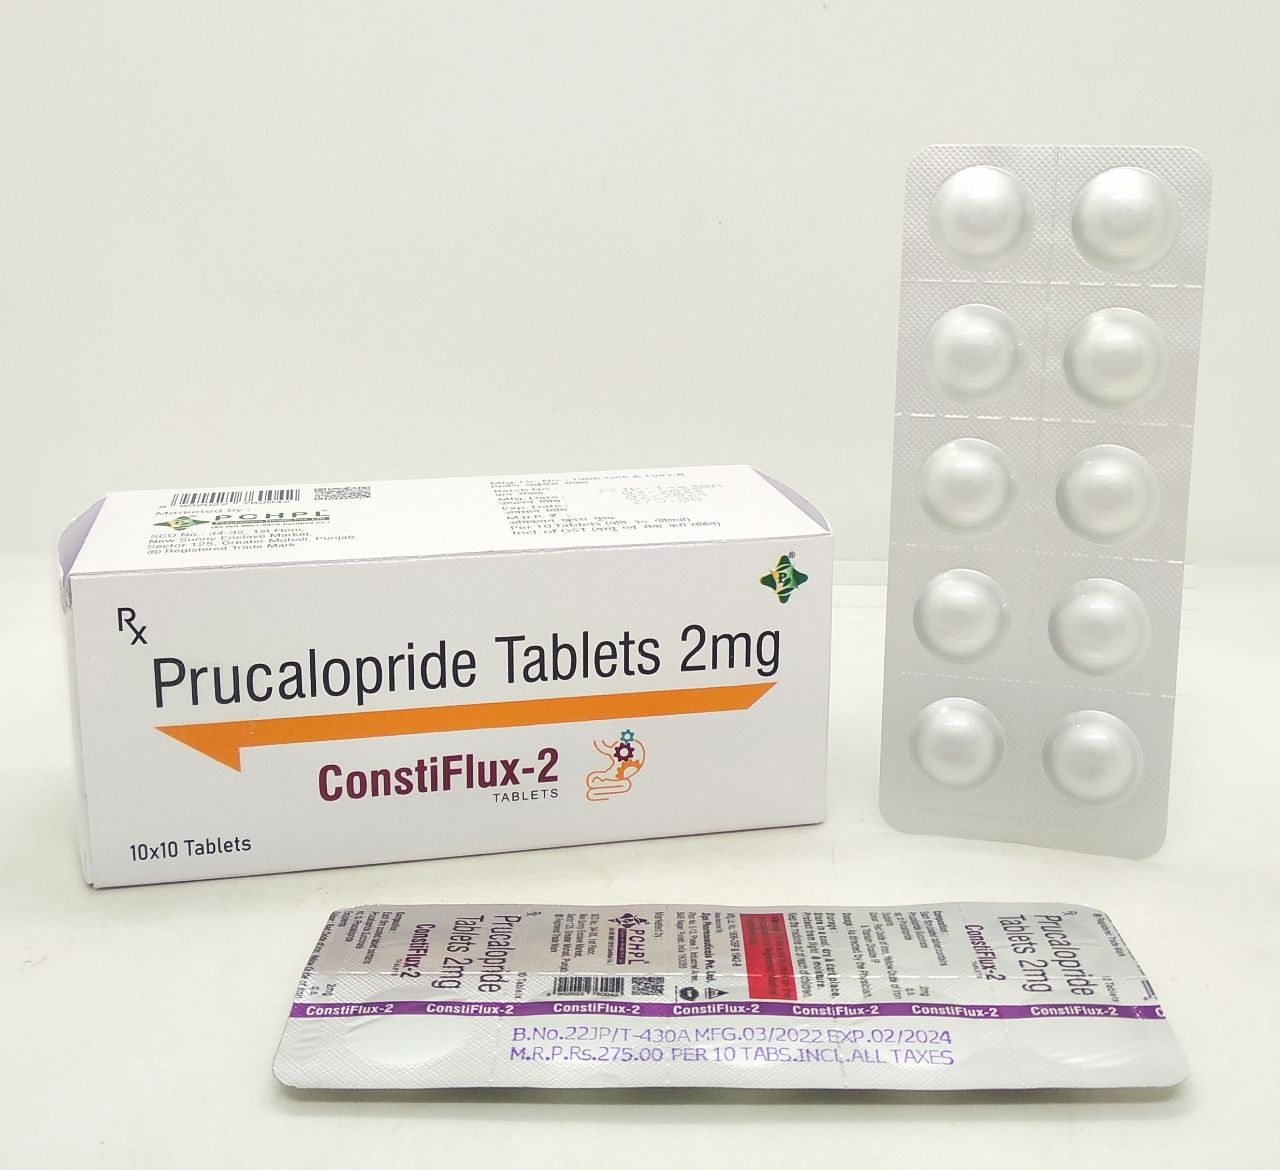 Prucalopride Tablets 2mg